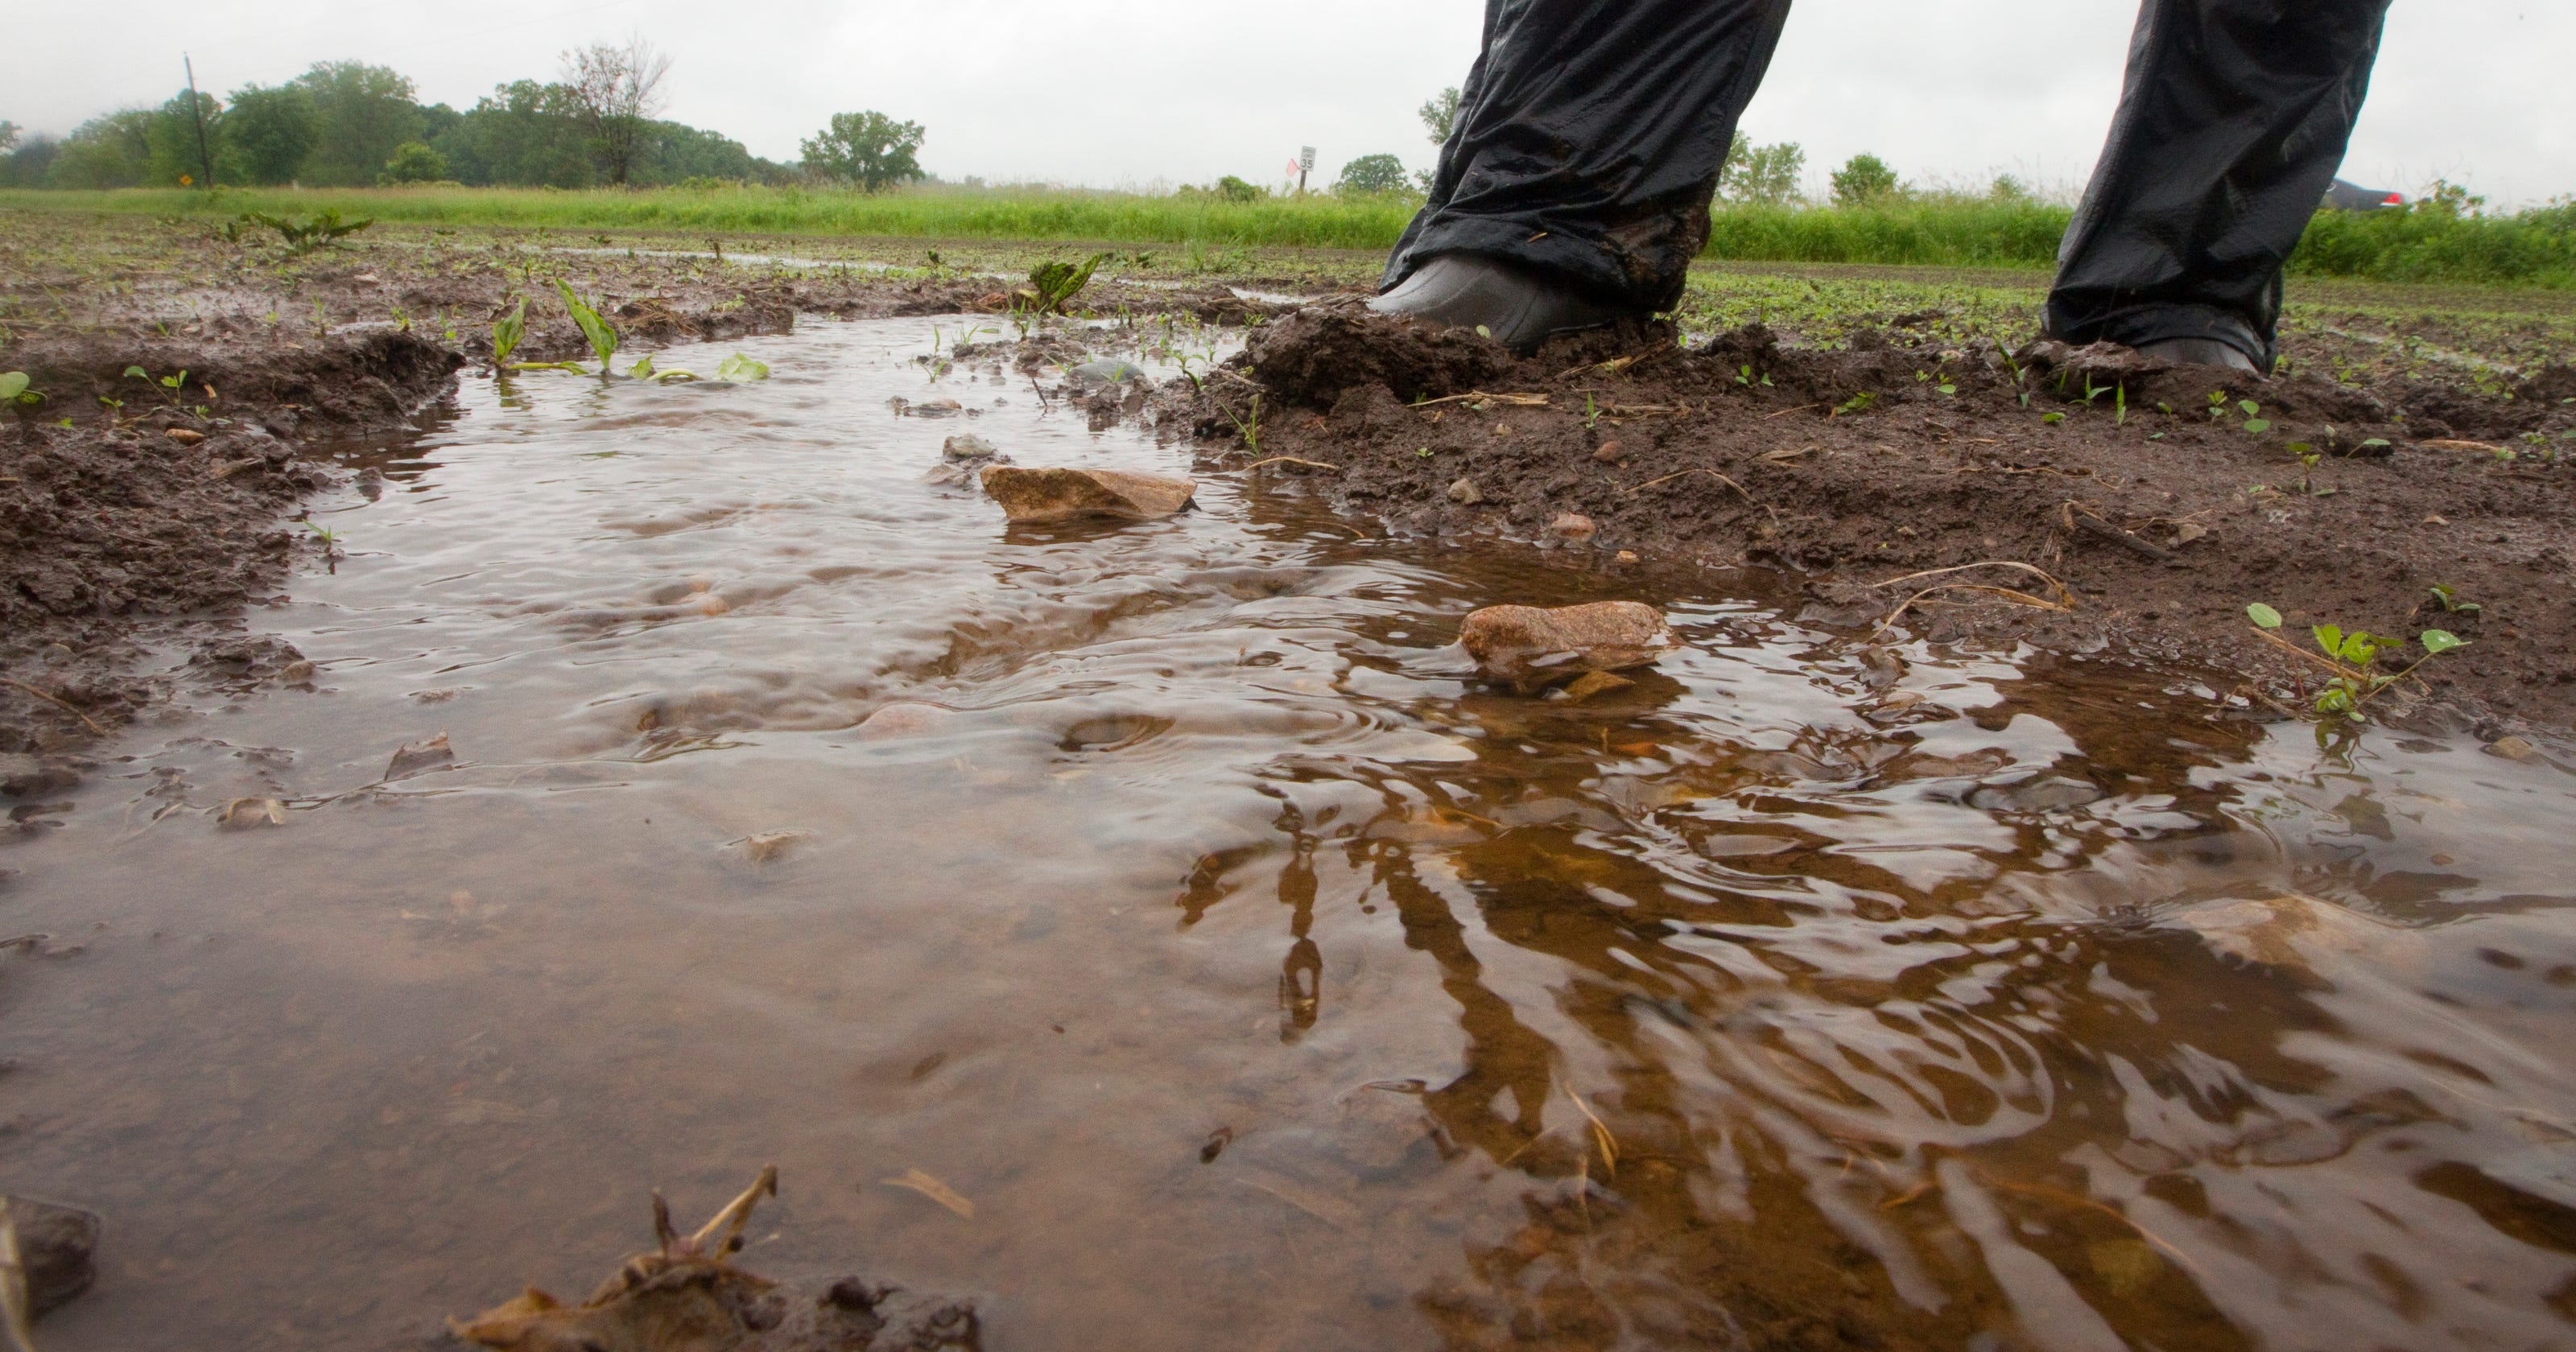 Wellwater contamination widespread in southwestern Wisconsin